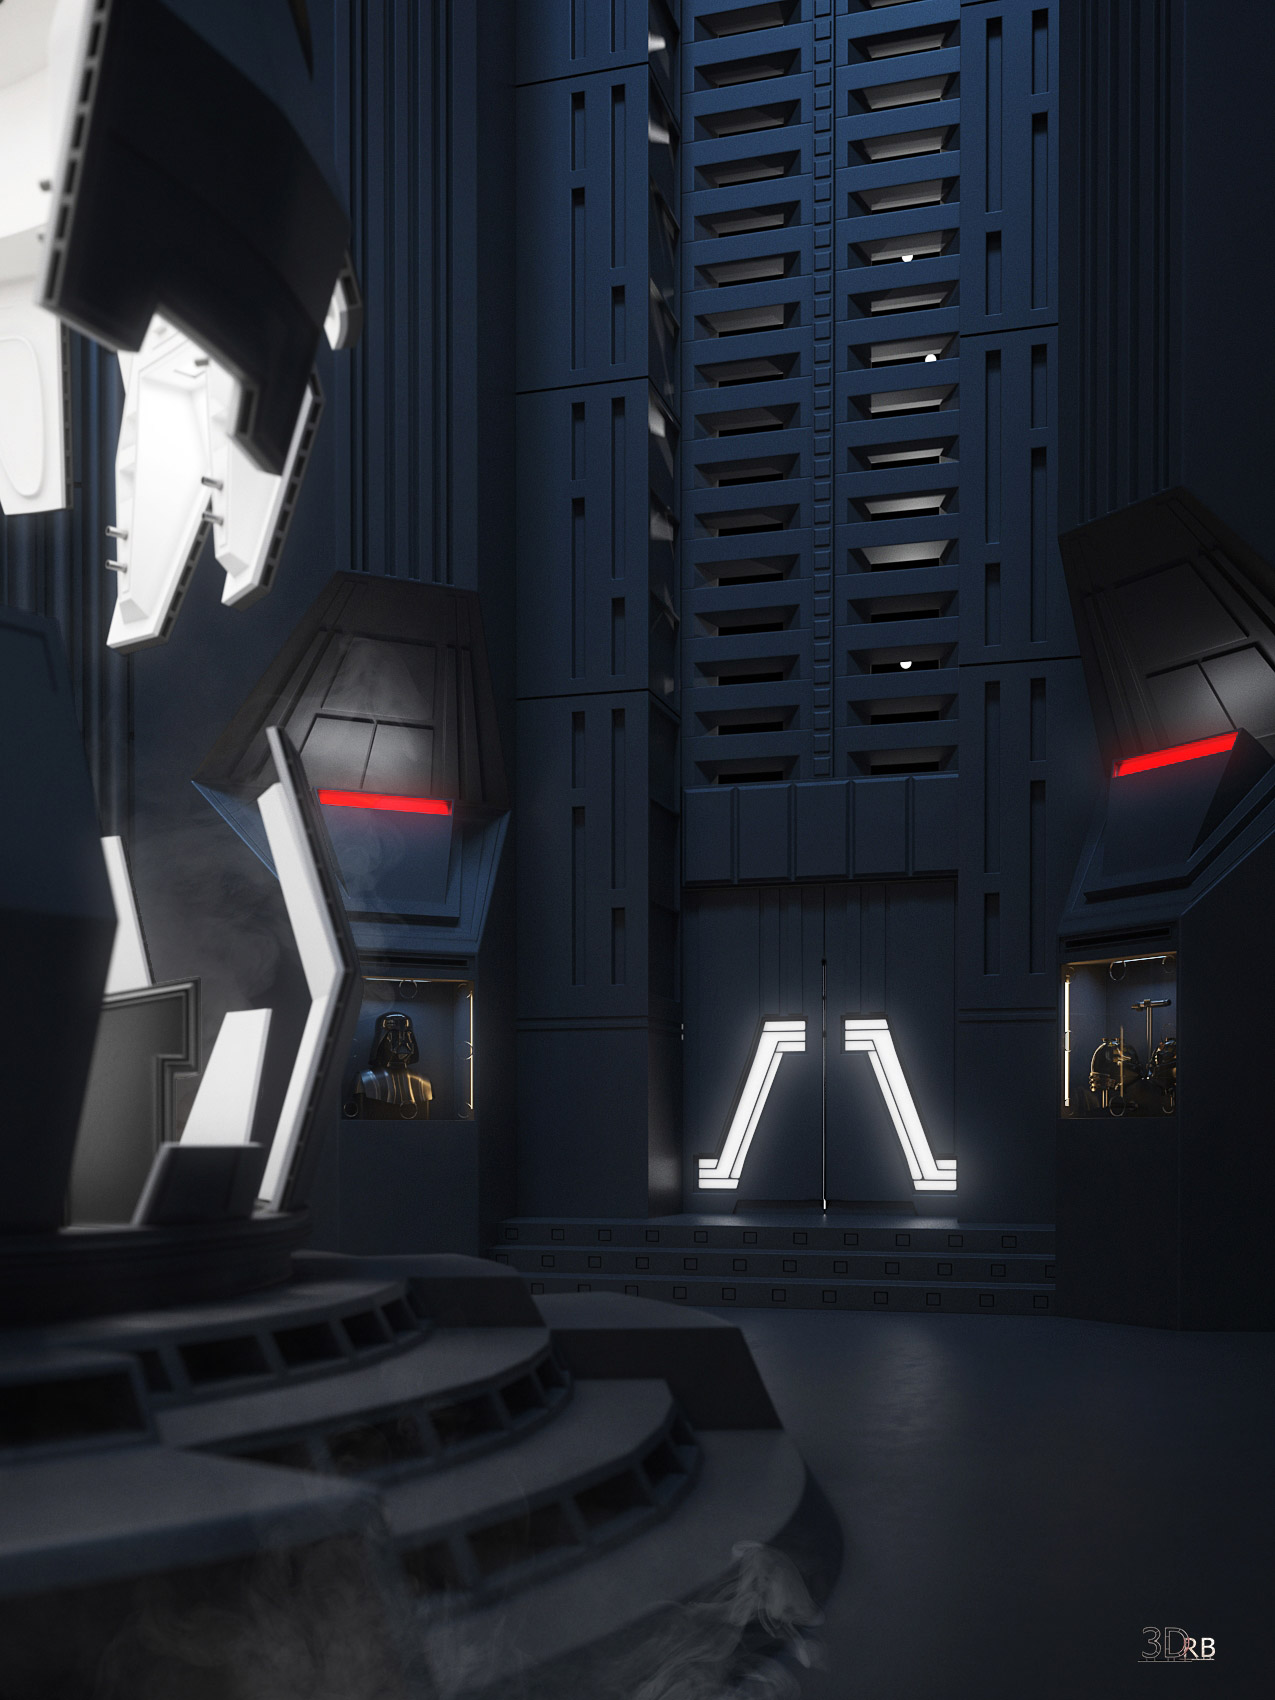 Star Wars Darth Vader Meditation Chamber 3d Rb Modelling And Rendering